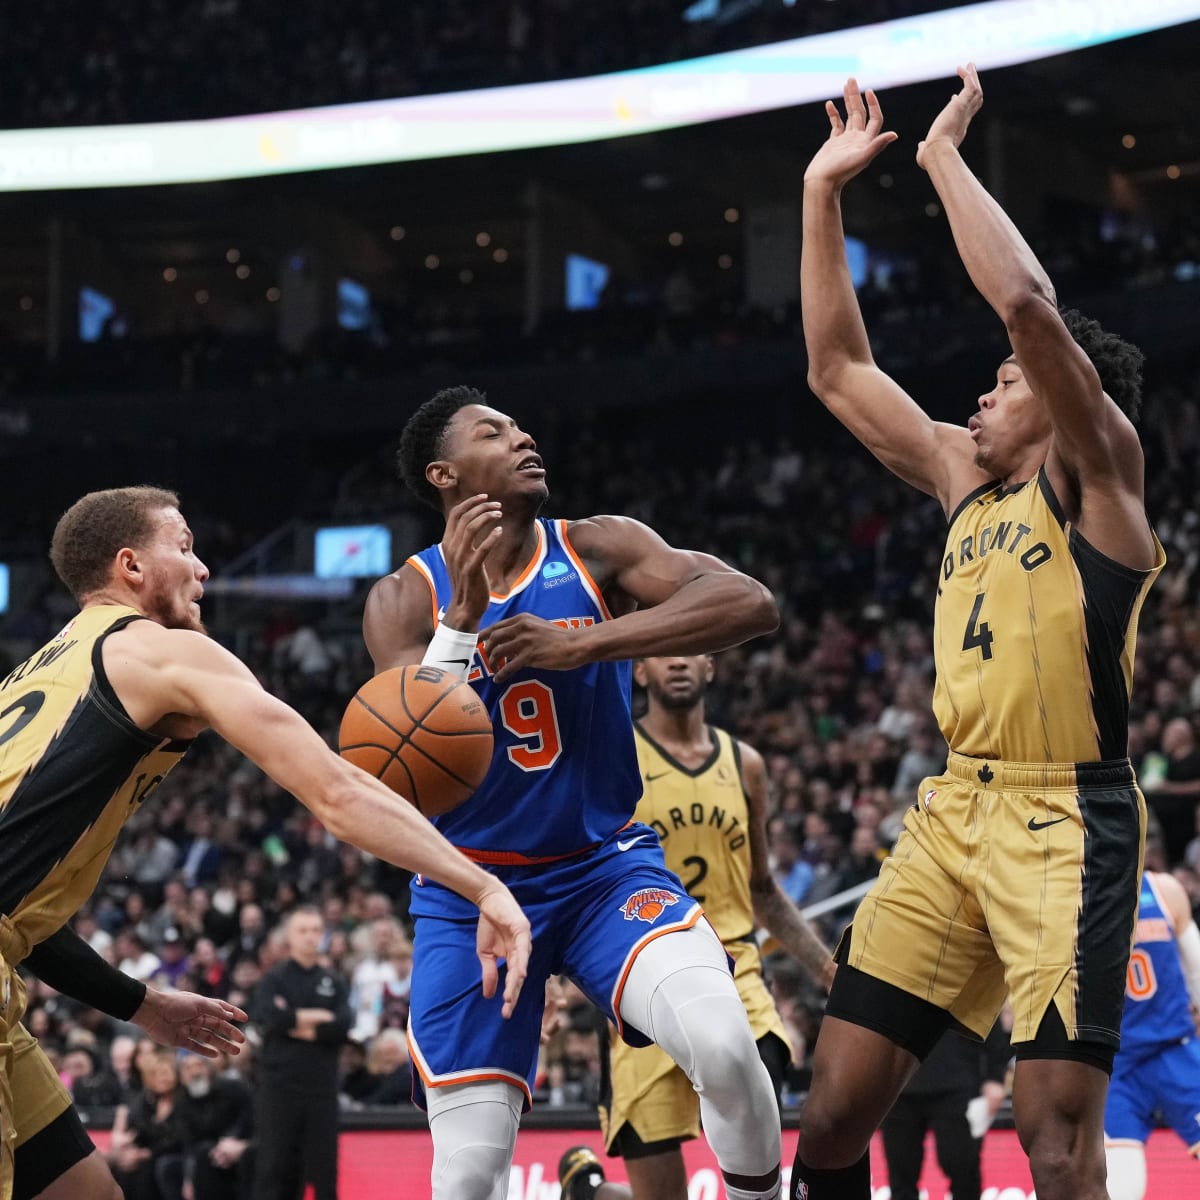 Toronto Raptors vs. New York Knicks: Preview, TV Schedule, Injuries, and  More - Raptors HQ